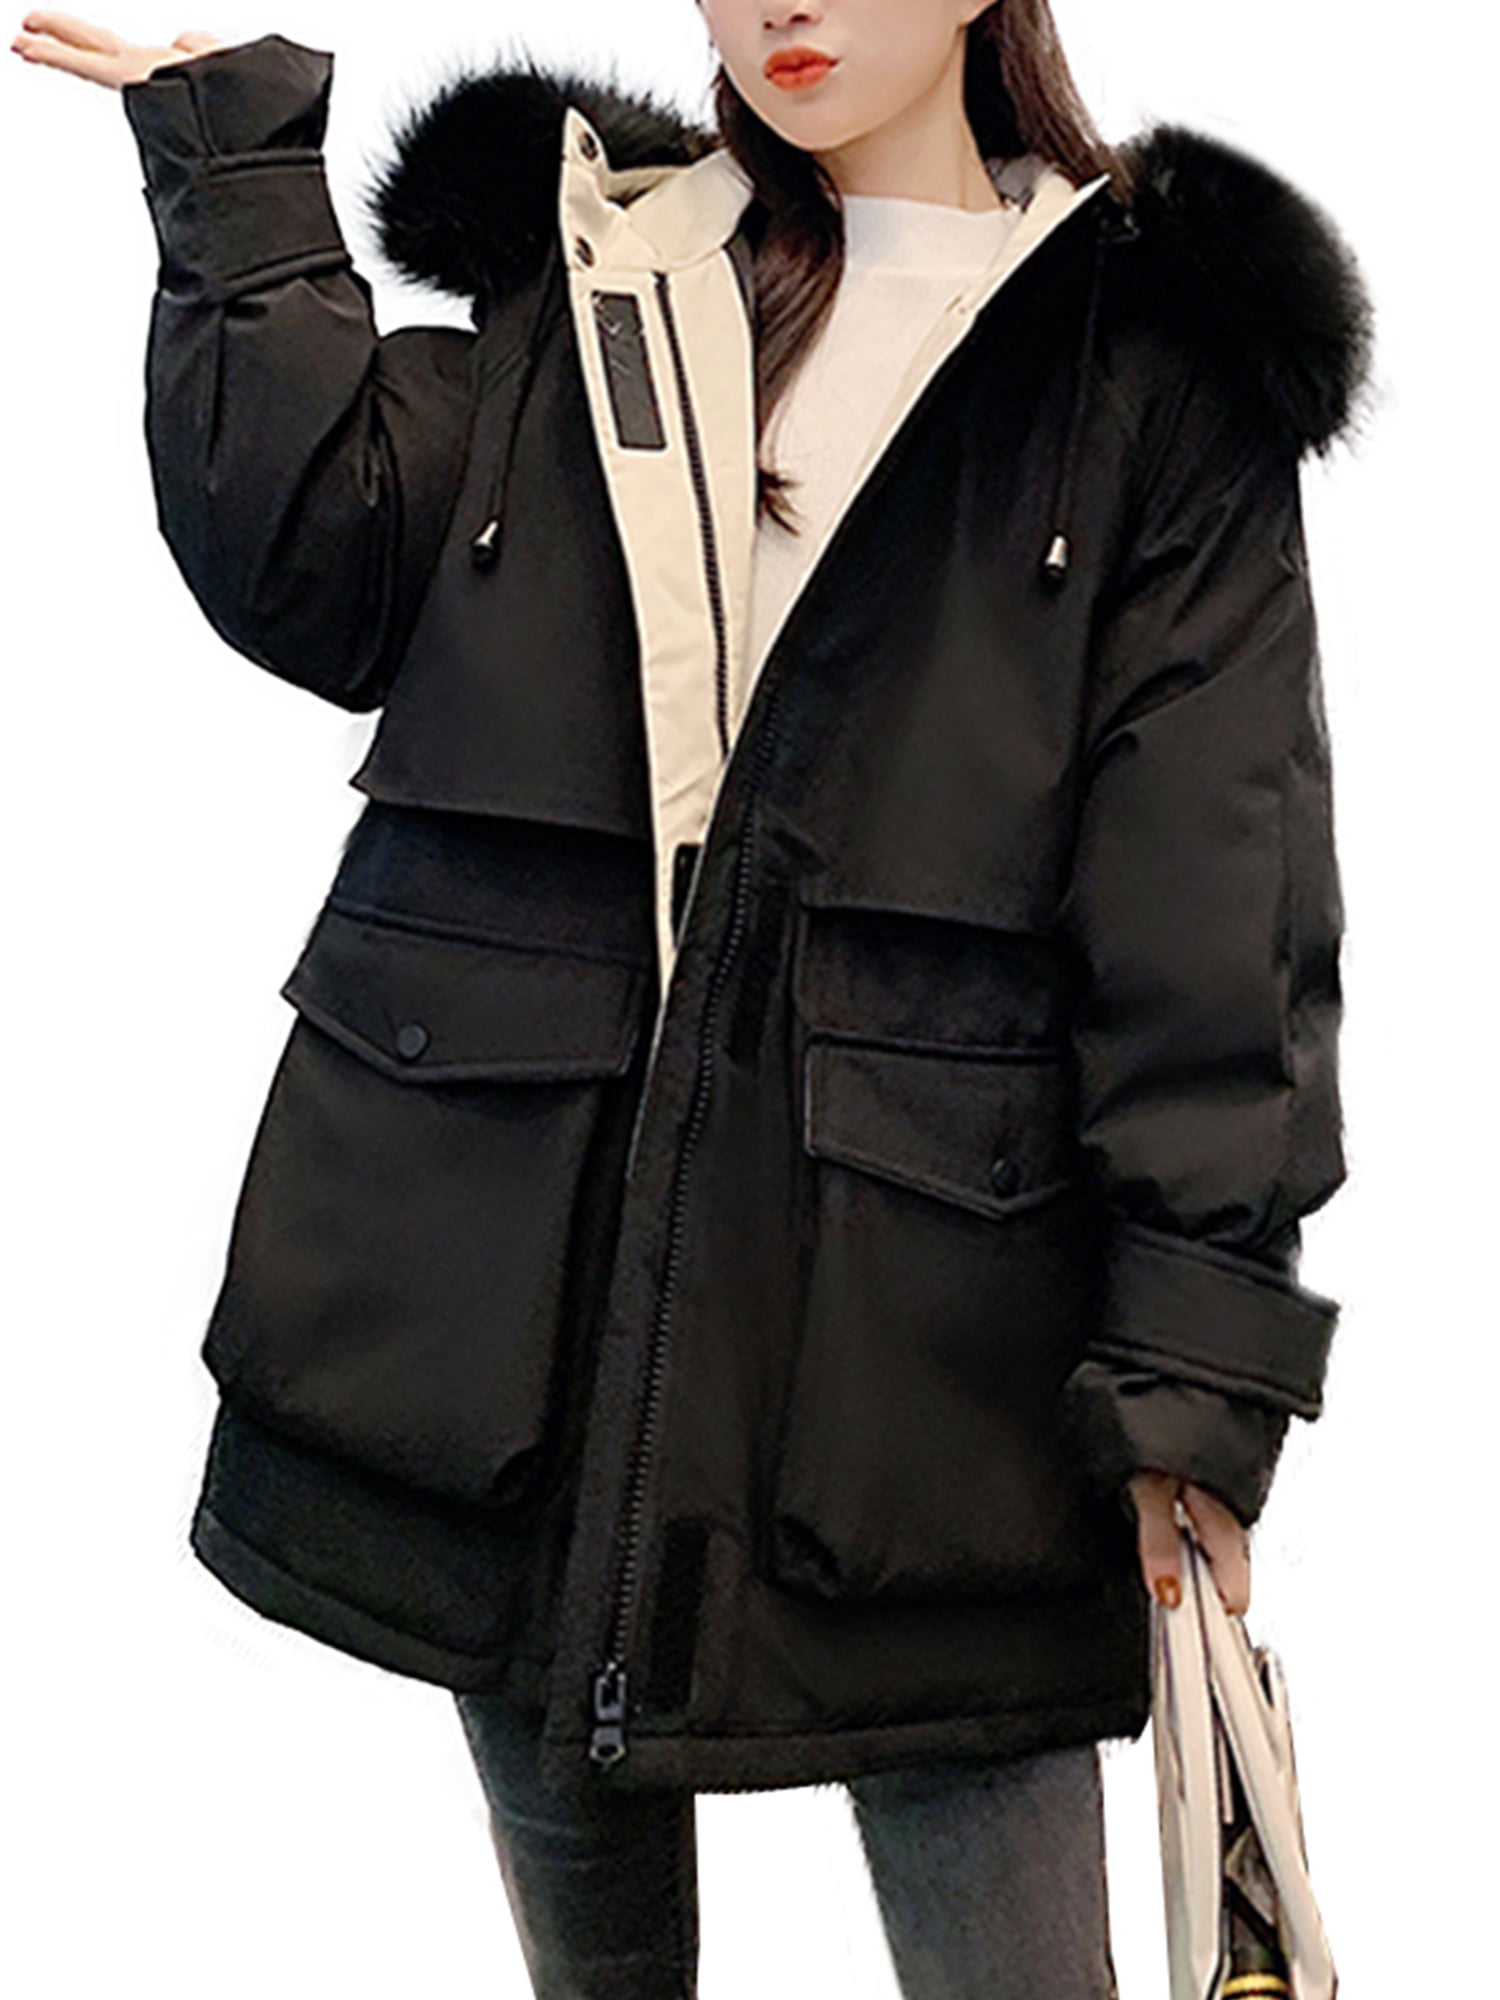 Black Thick Winter Women Coat Vintage Overcoat Wool Lapel Warm Solid 2018 Coats,Black,L